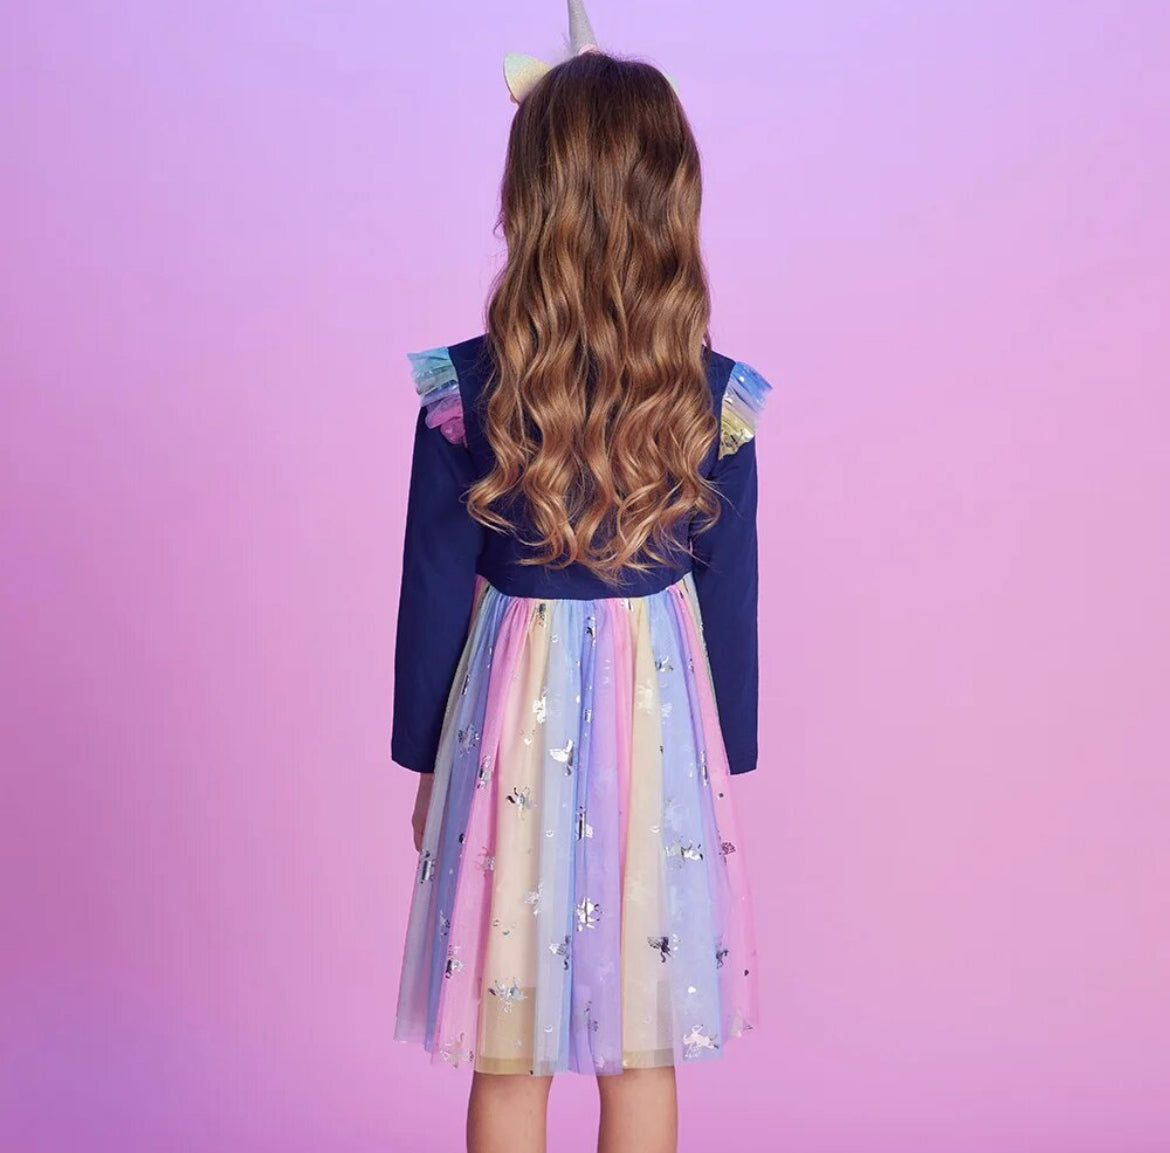 New Unicorn Girls Dress, Cotton Candy Colors Mesh Dress, Modish ✨ Glam Collection